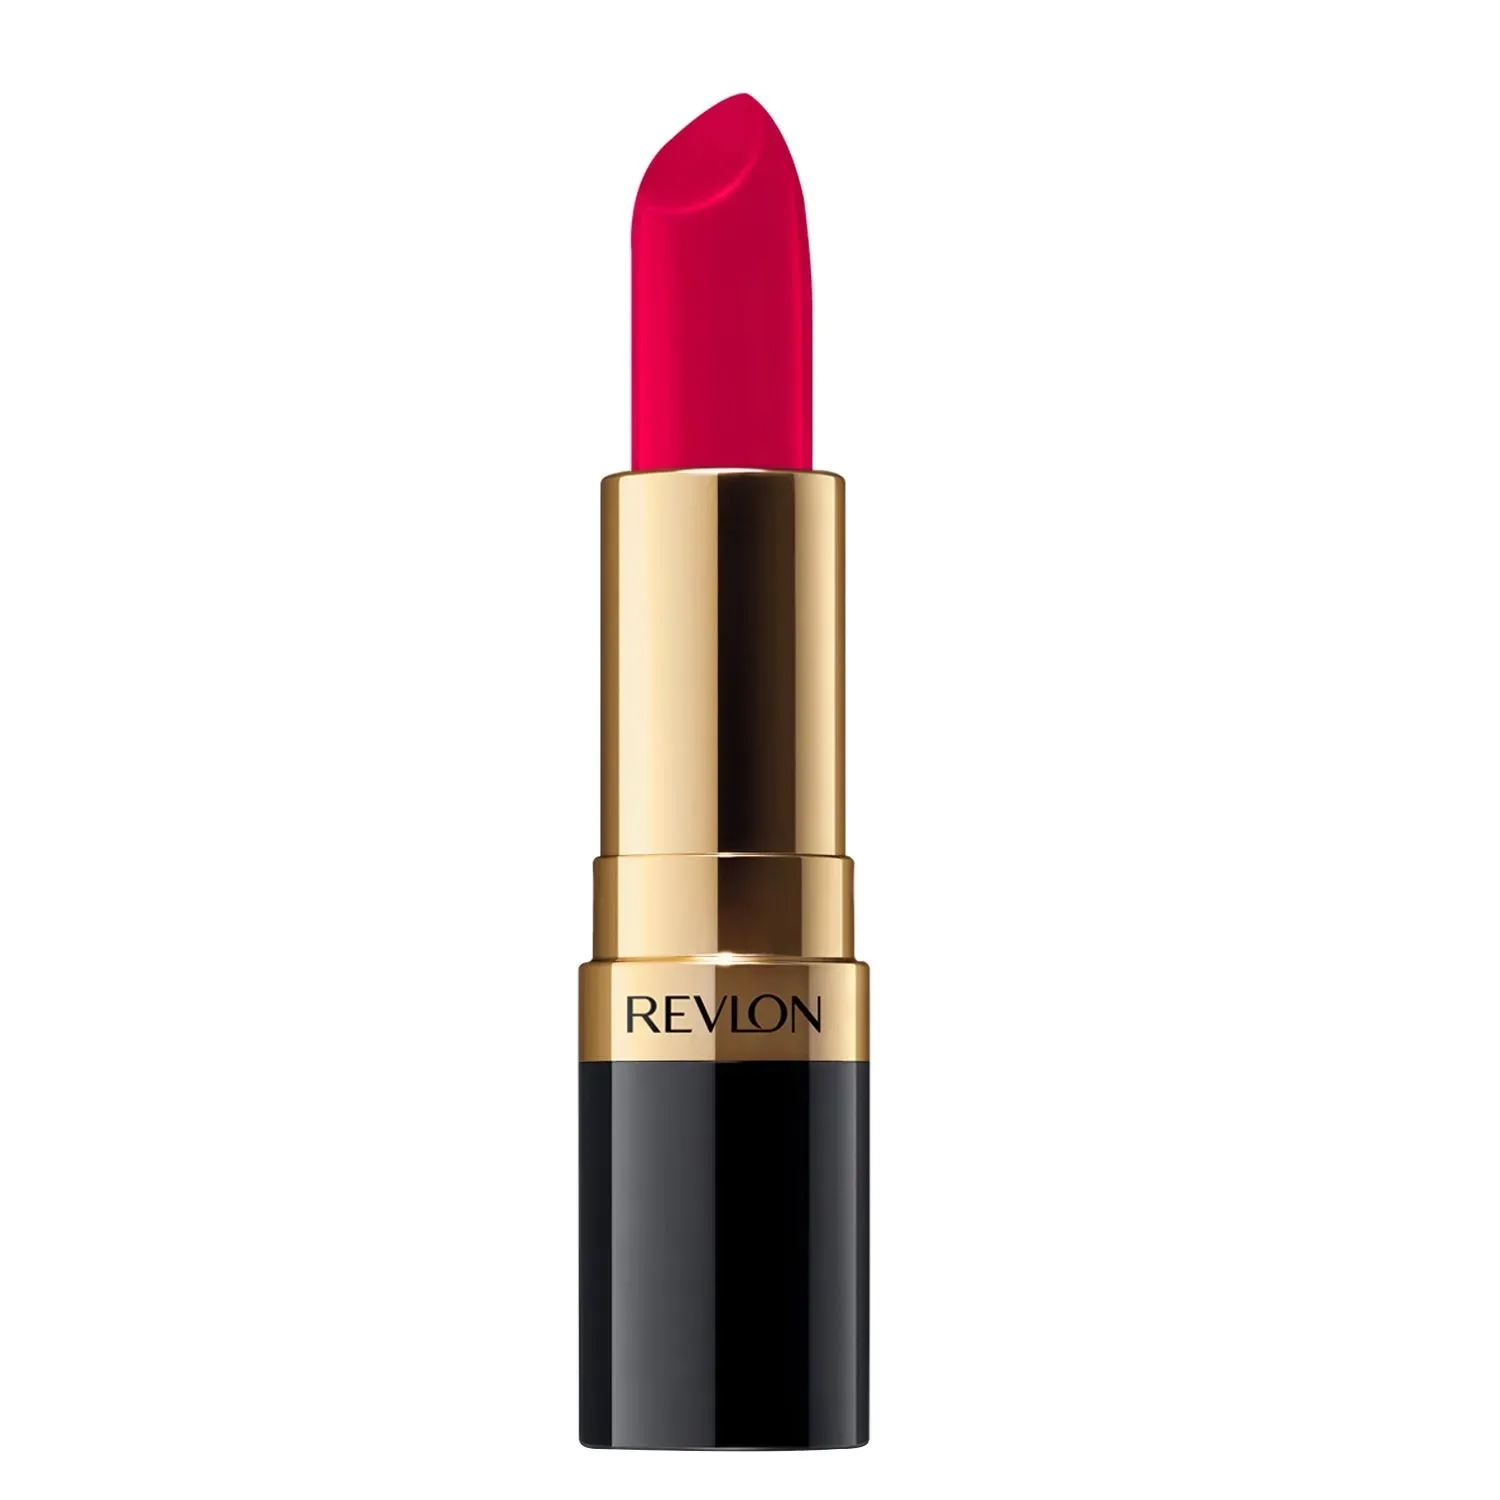 Revlon | Revlon Super Lustrous Lipstick - Certainly Red (4.2g)